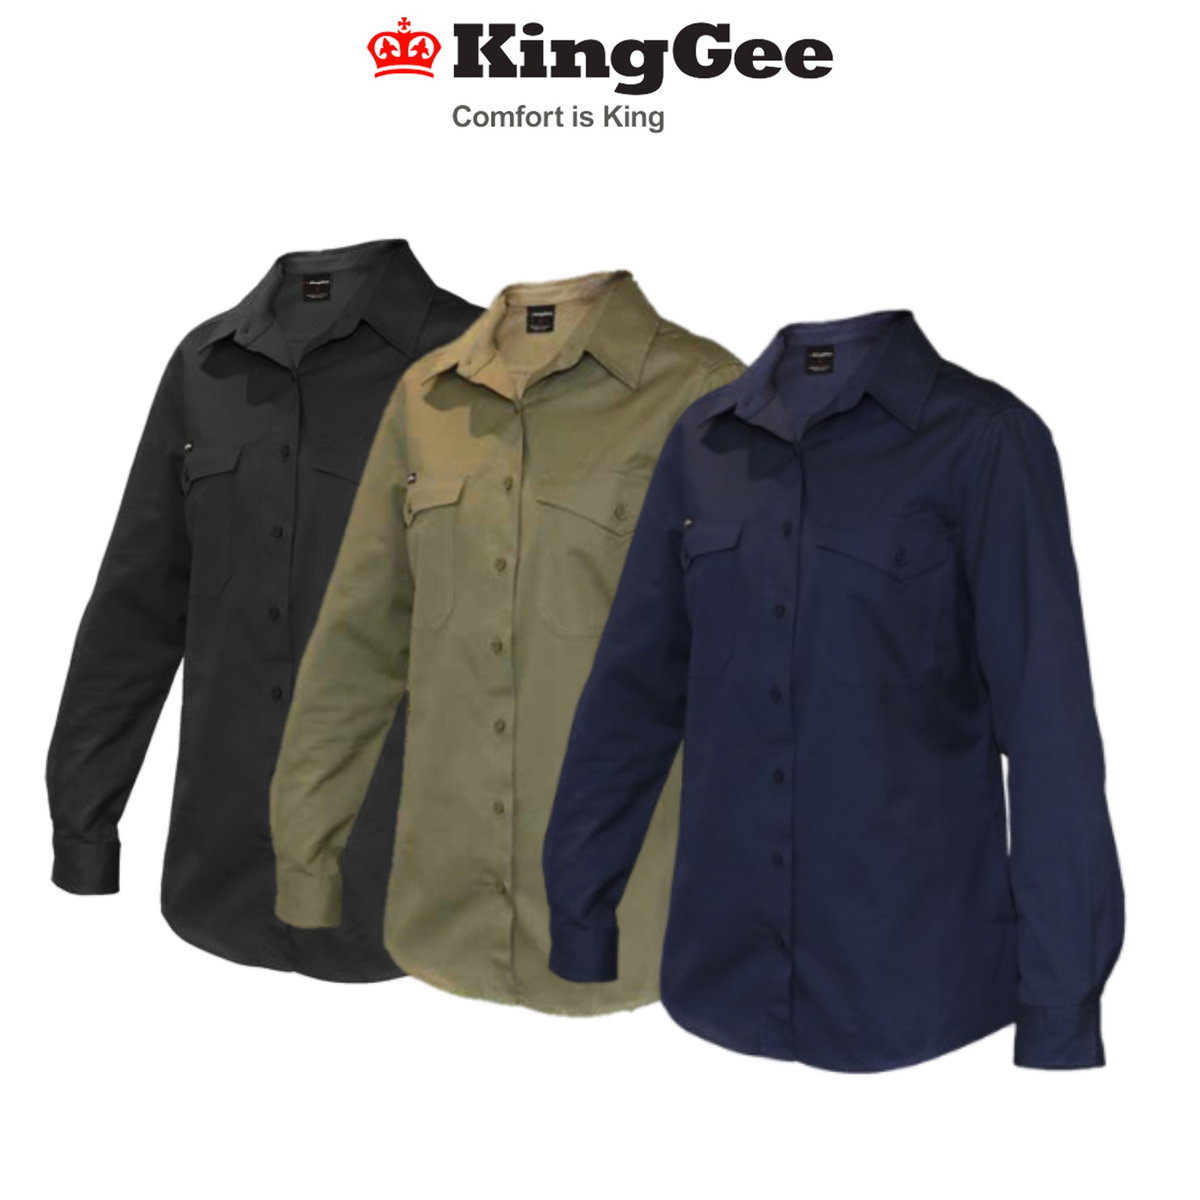 KingGee Womens Workcool 2 Shirt Long Sleeve Lightweight Breathable Work K69880